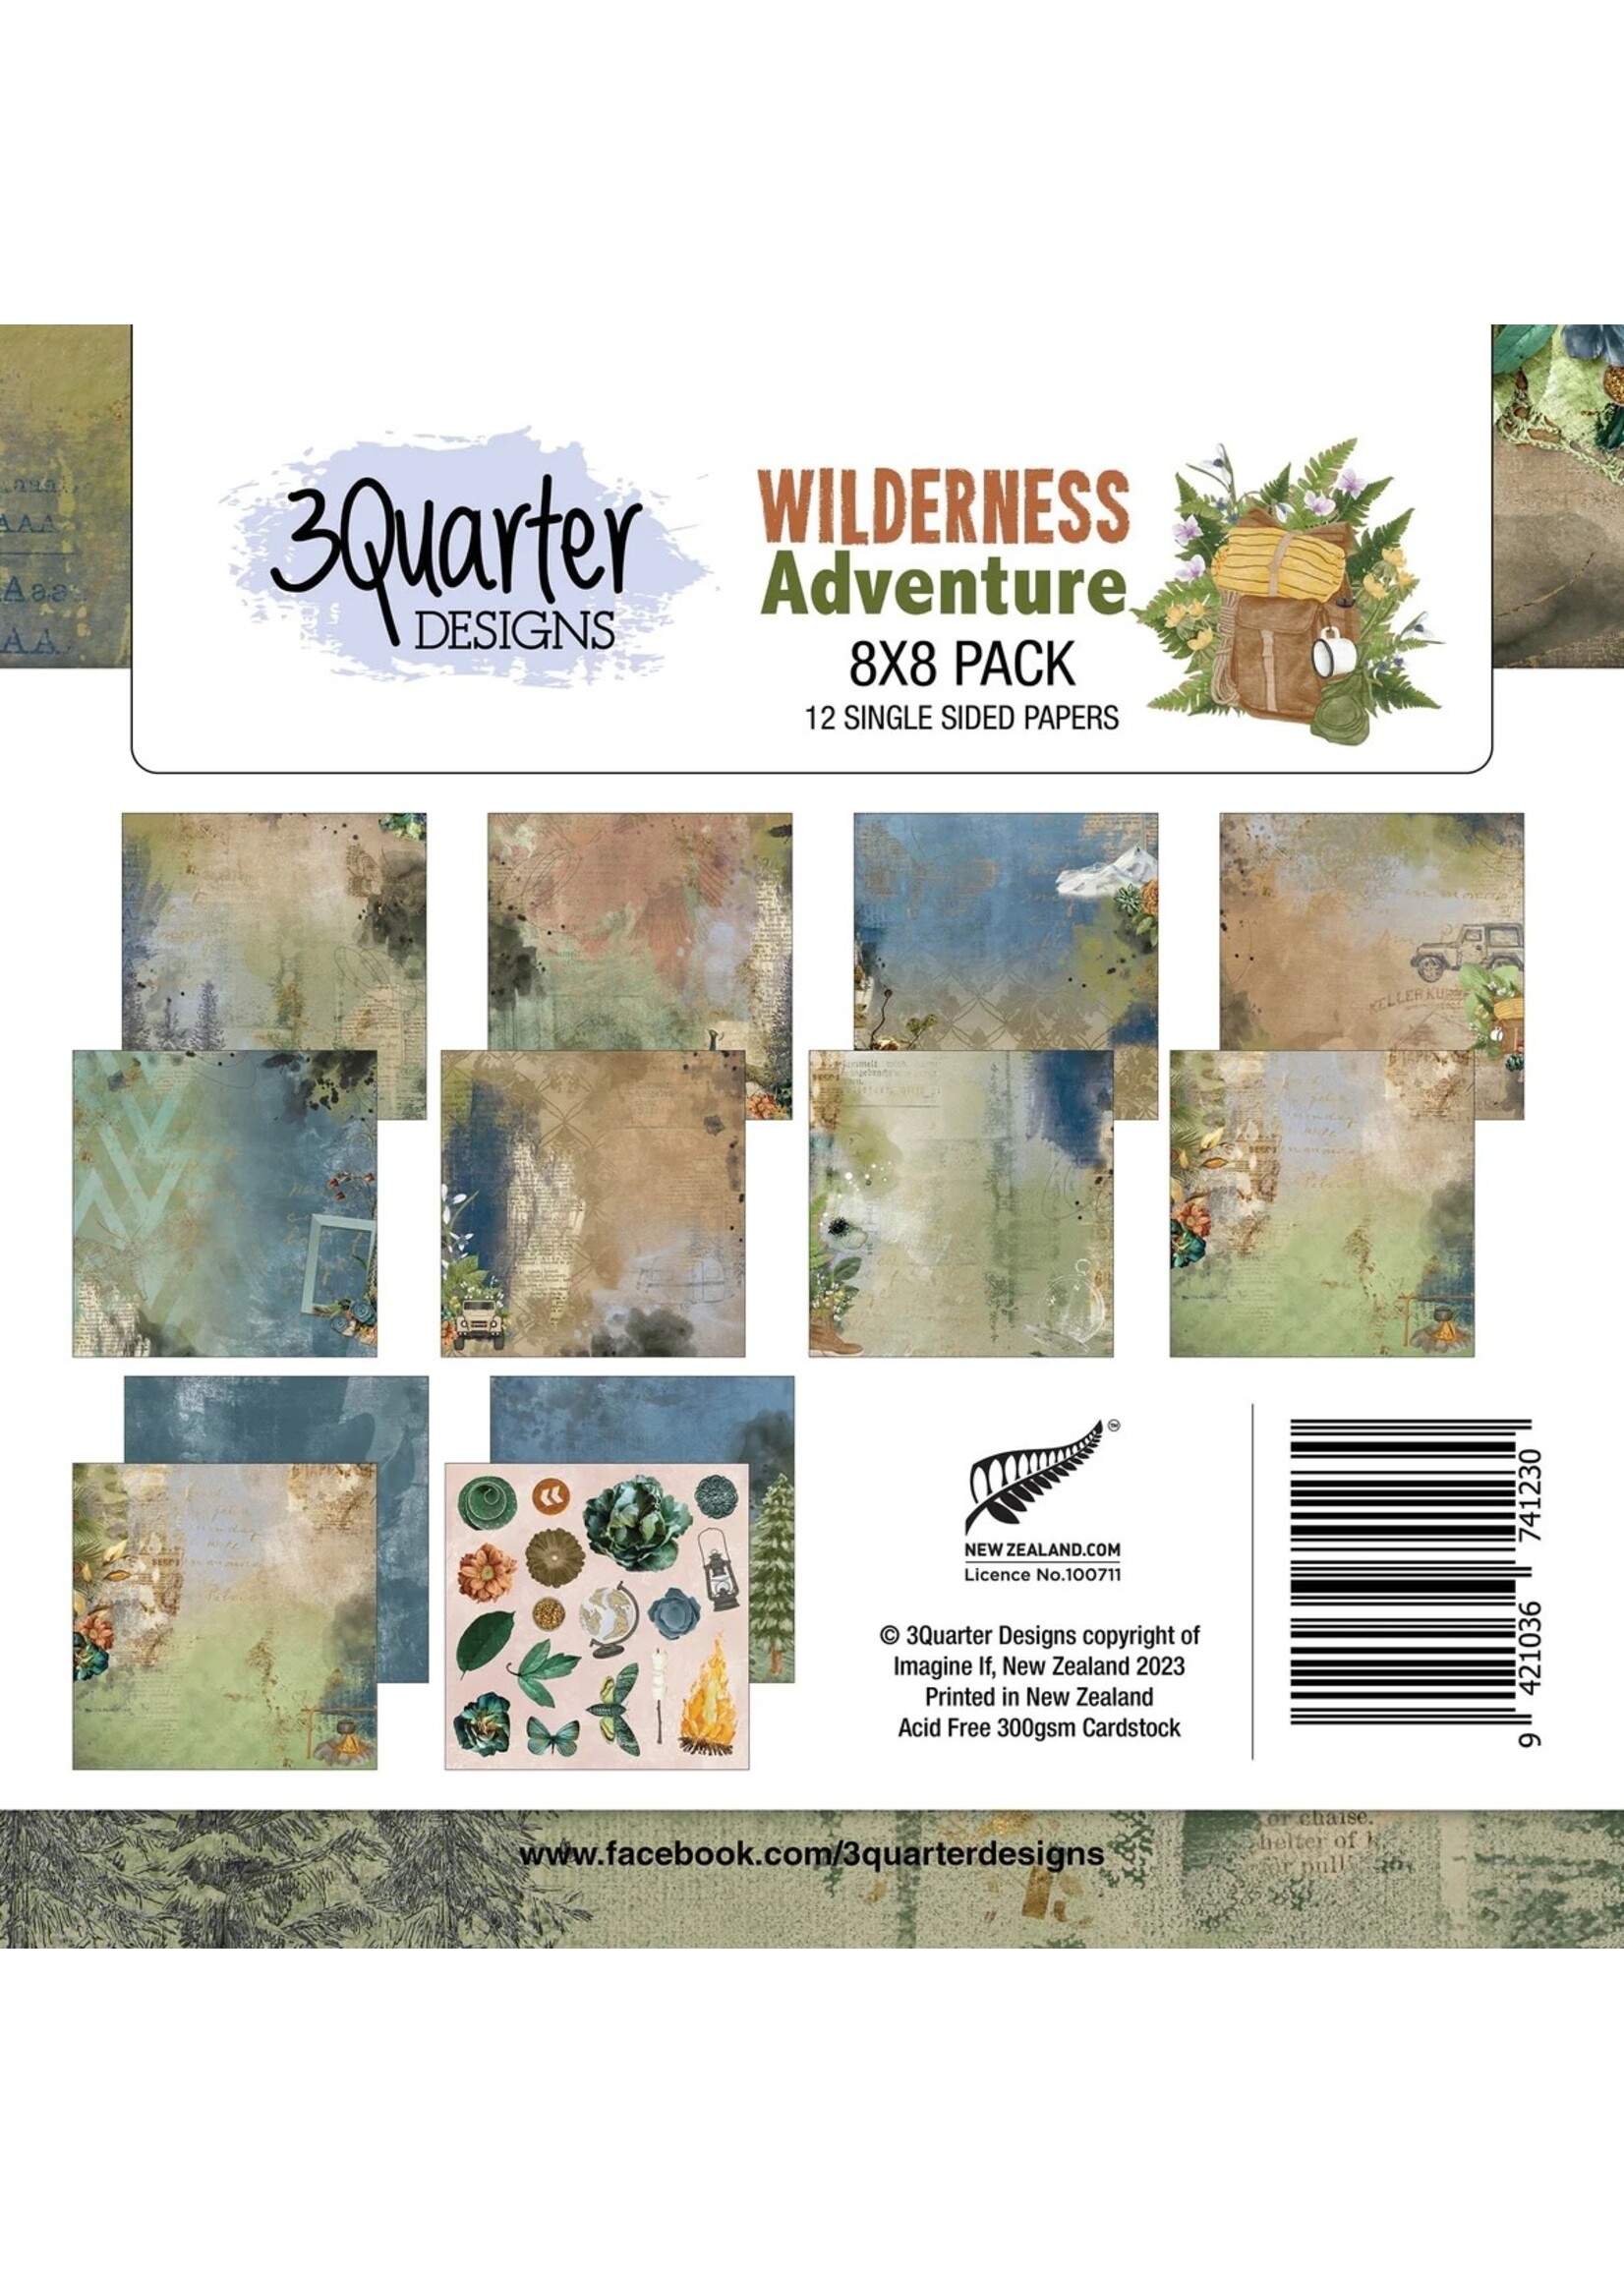 3Quarter Designs Wilderness Adventure 8x8 Paper Pad